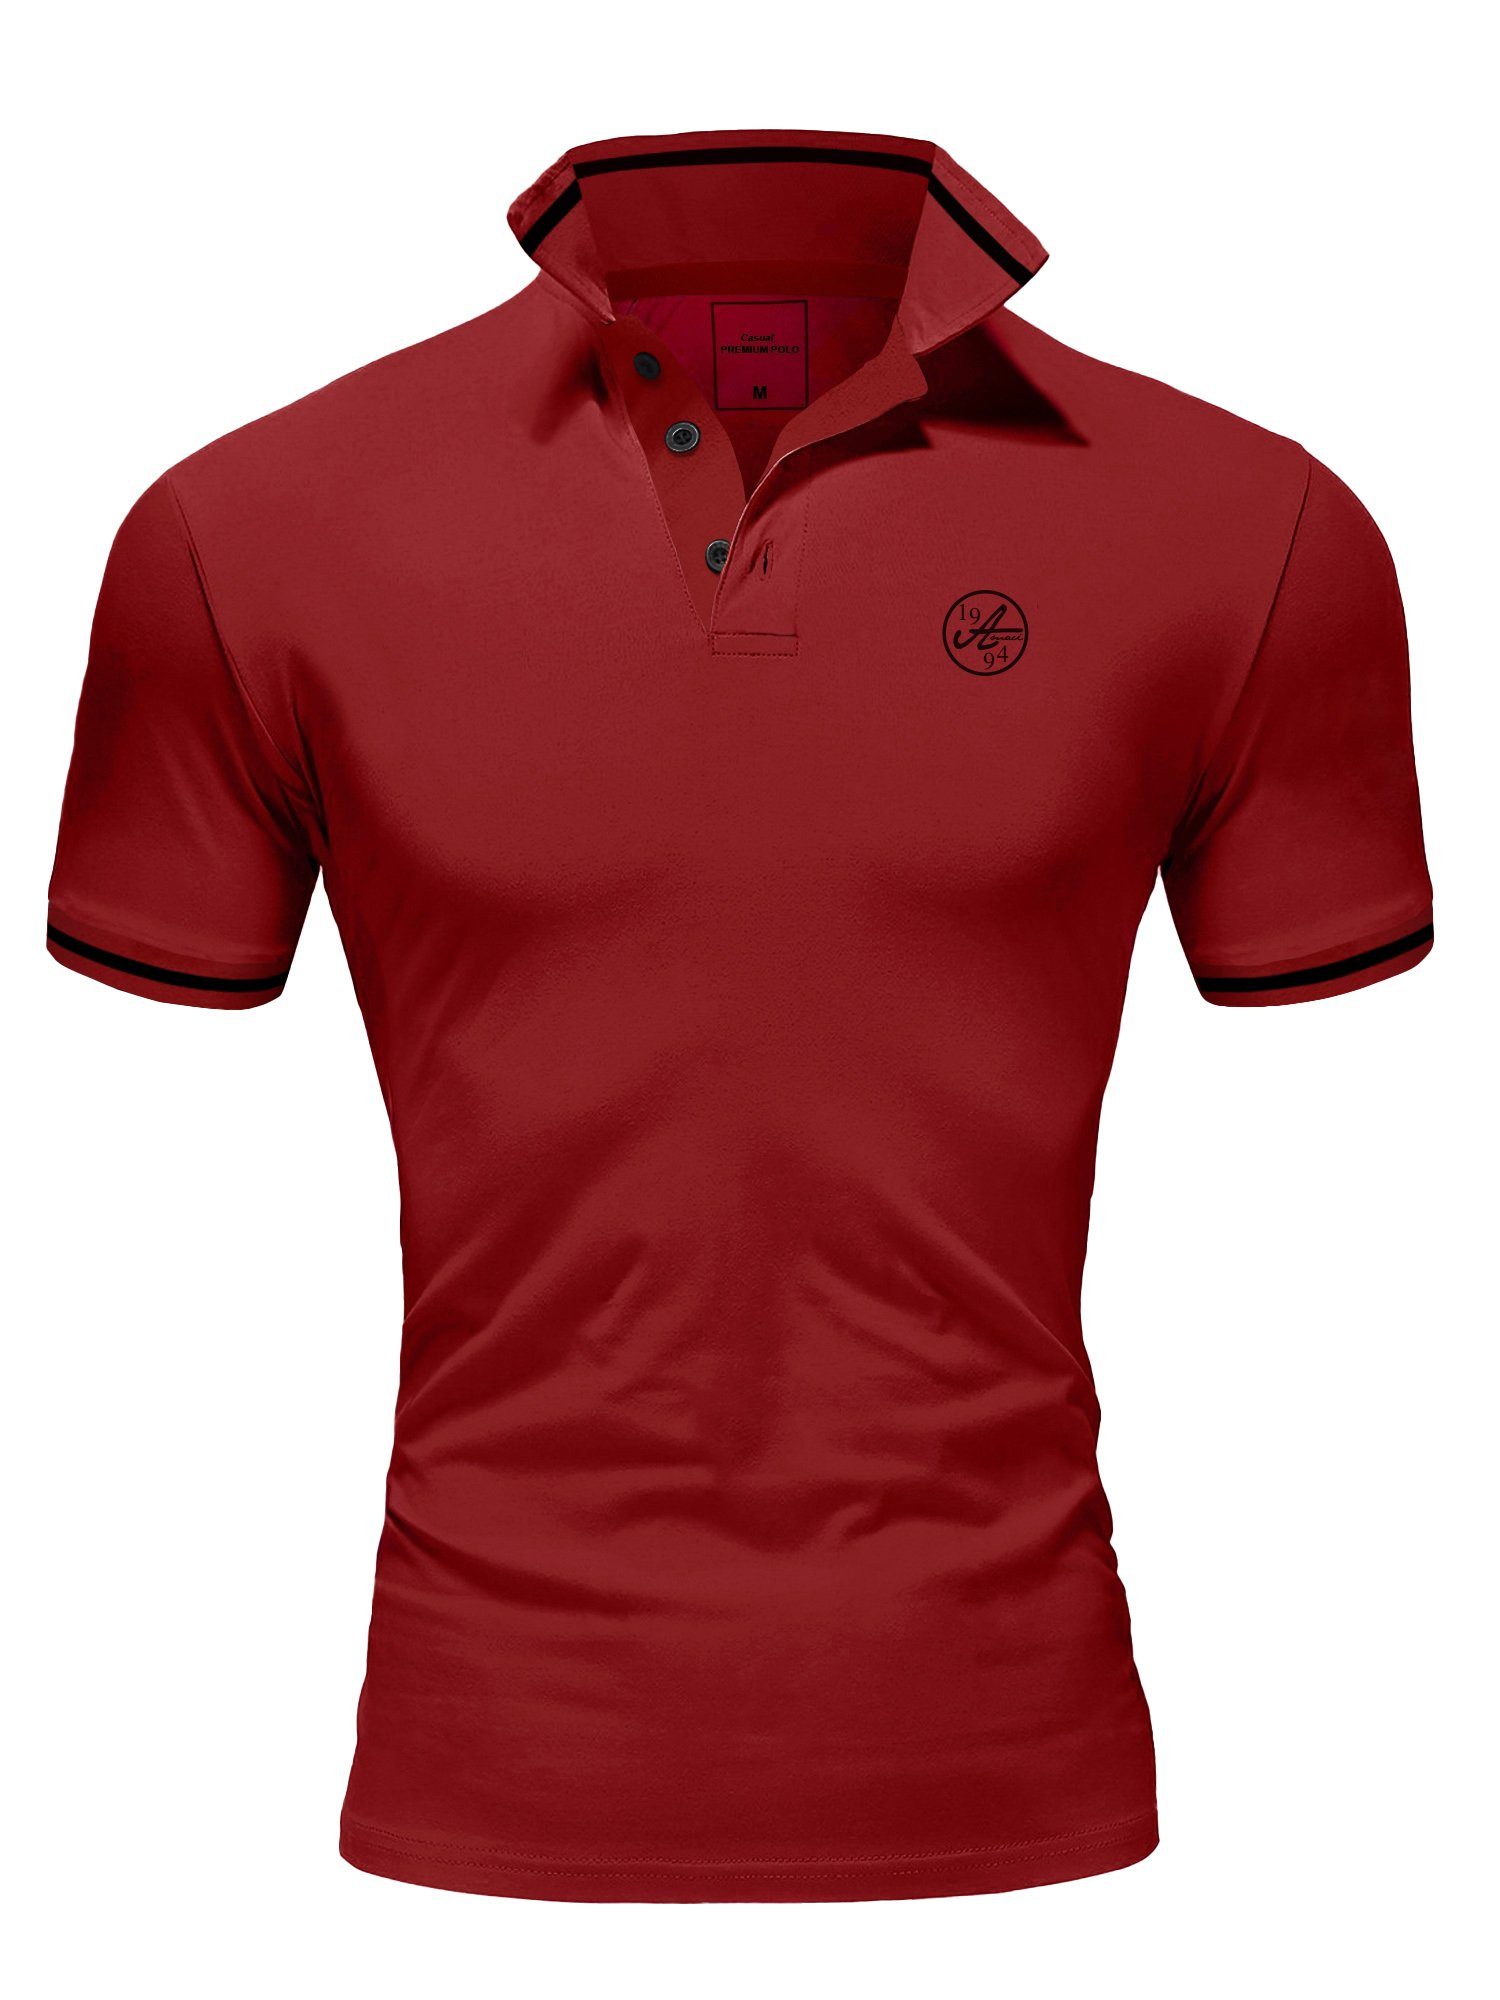 Amaci&Sons Poloshirt MACON Herren Basic Kontrast Stickerei Kurzarm Polohemd T-Shirt Bordeaux/Schwarz